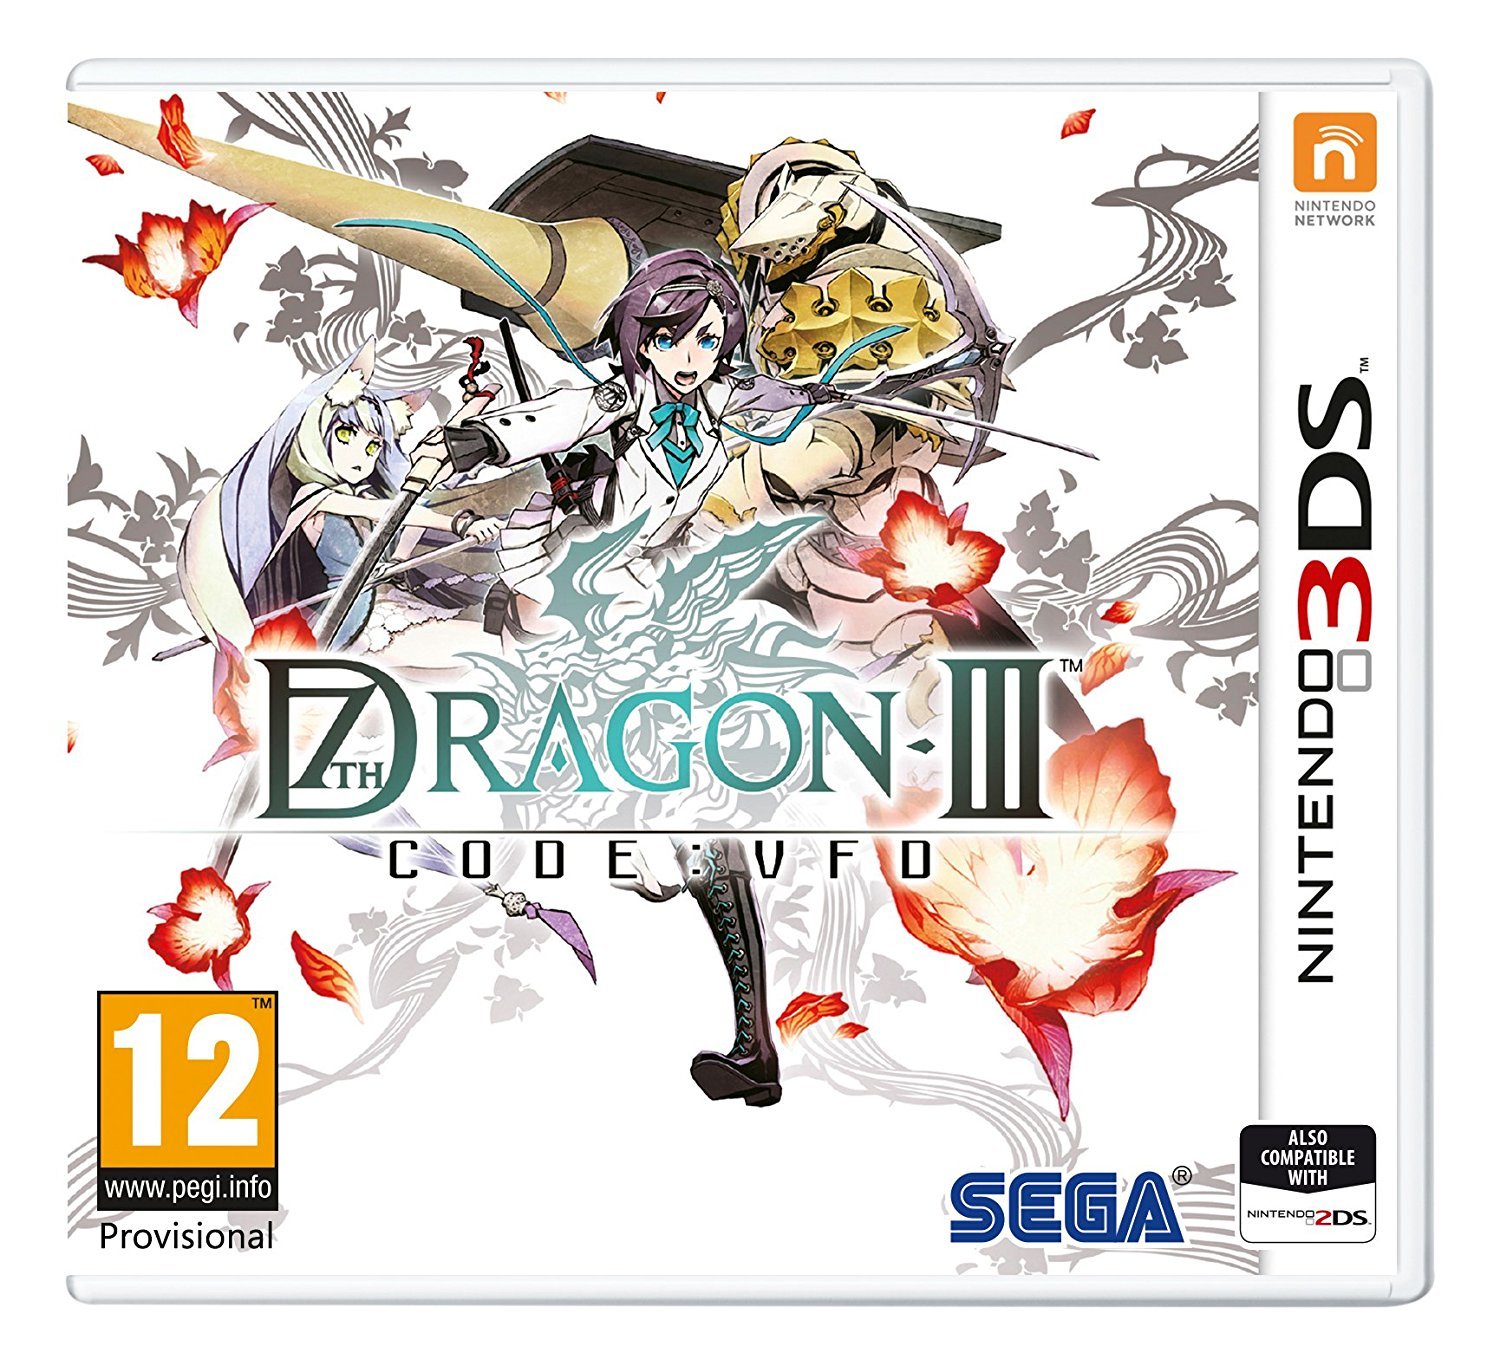 7th dragon code vfd launch edition